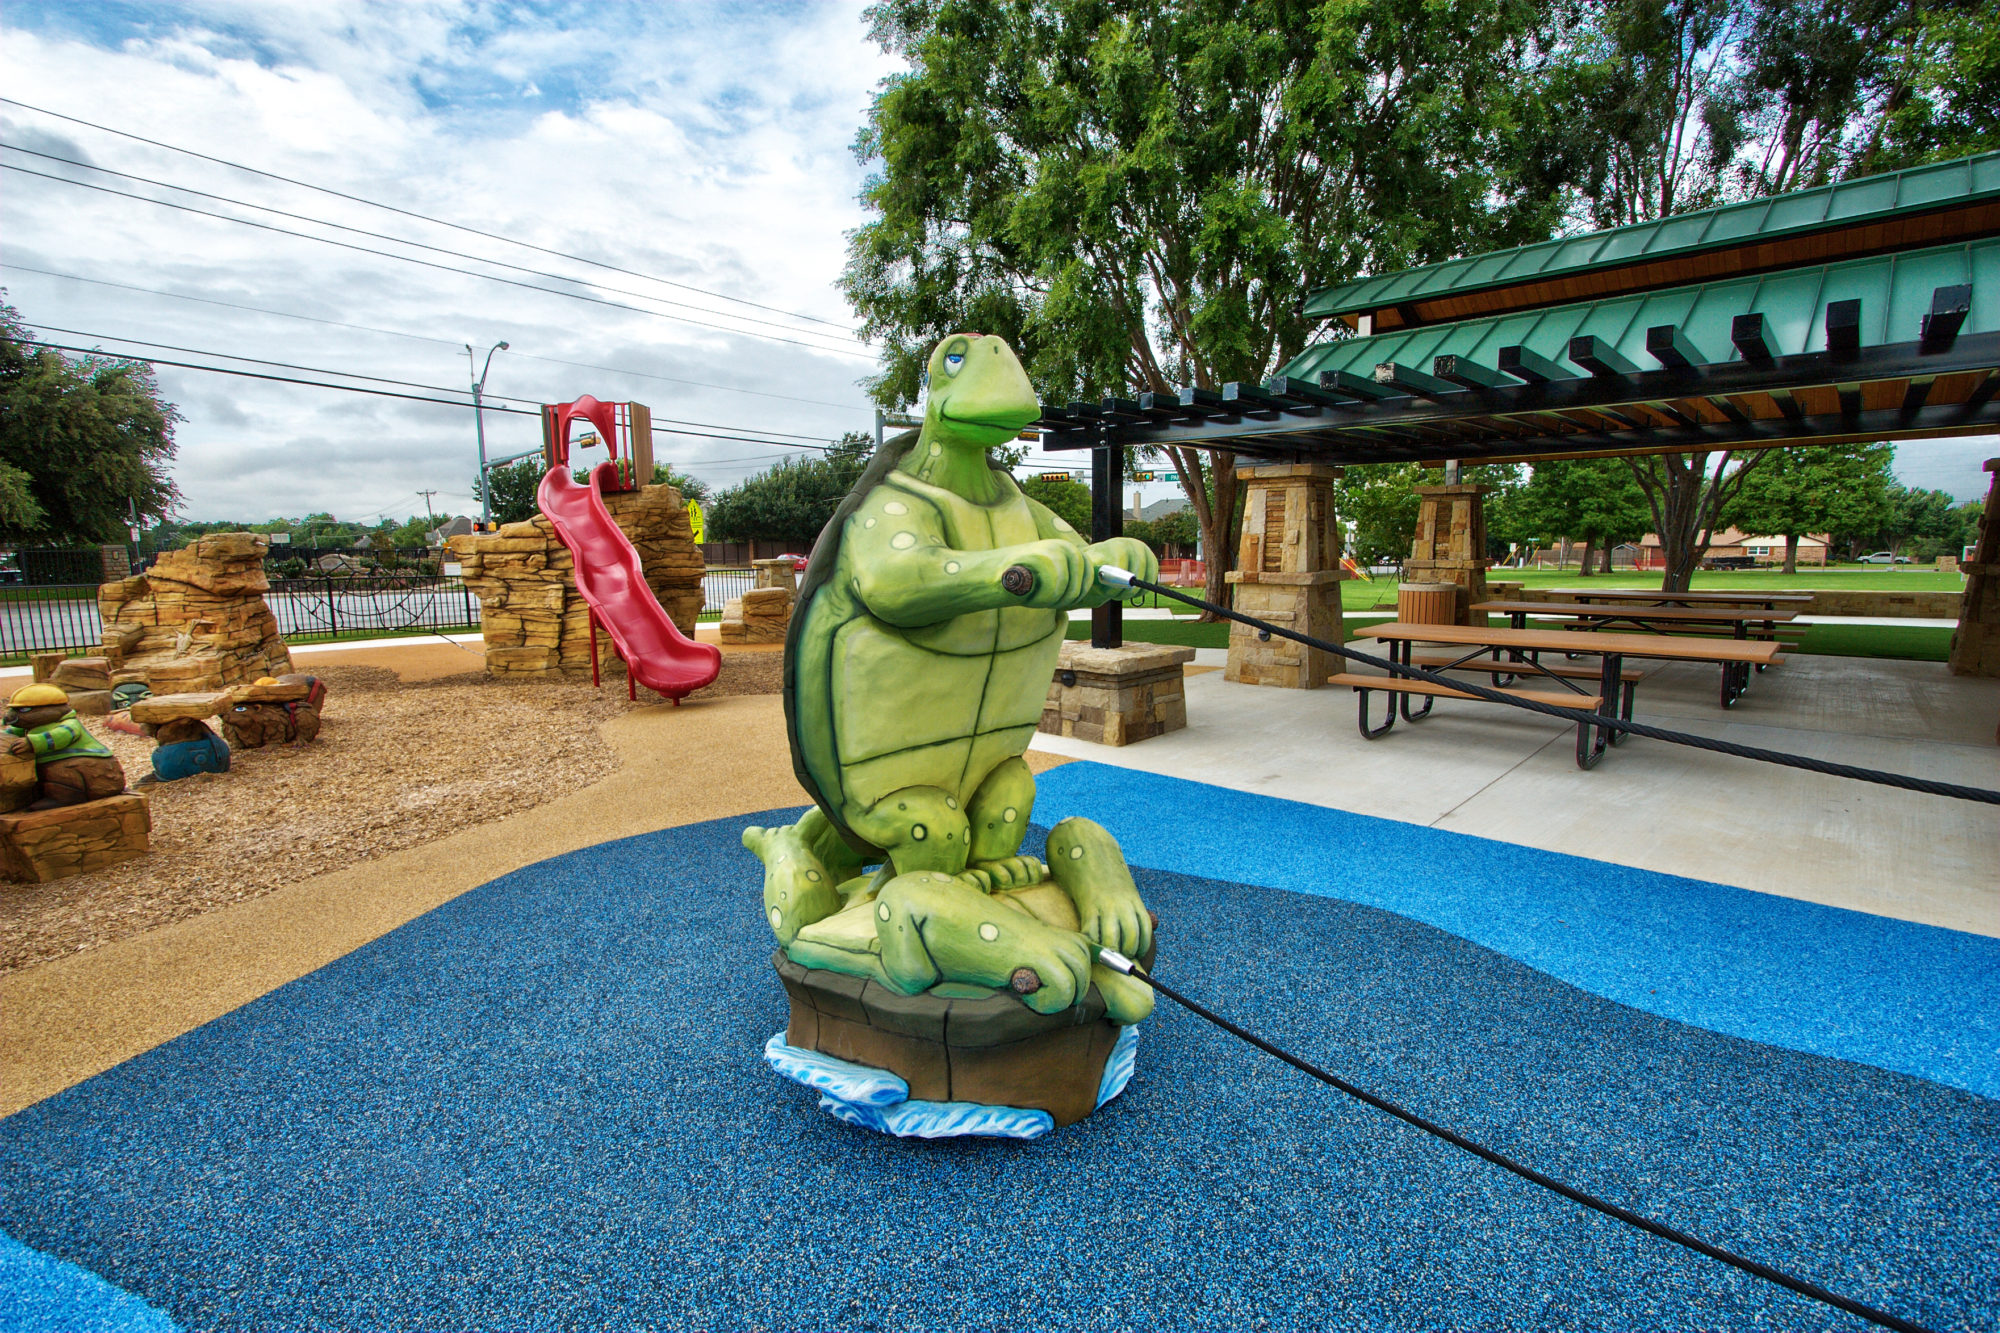 Tortoise at sea themed playground